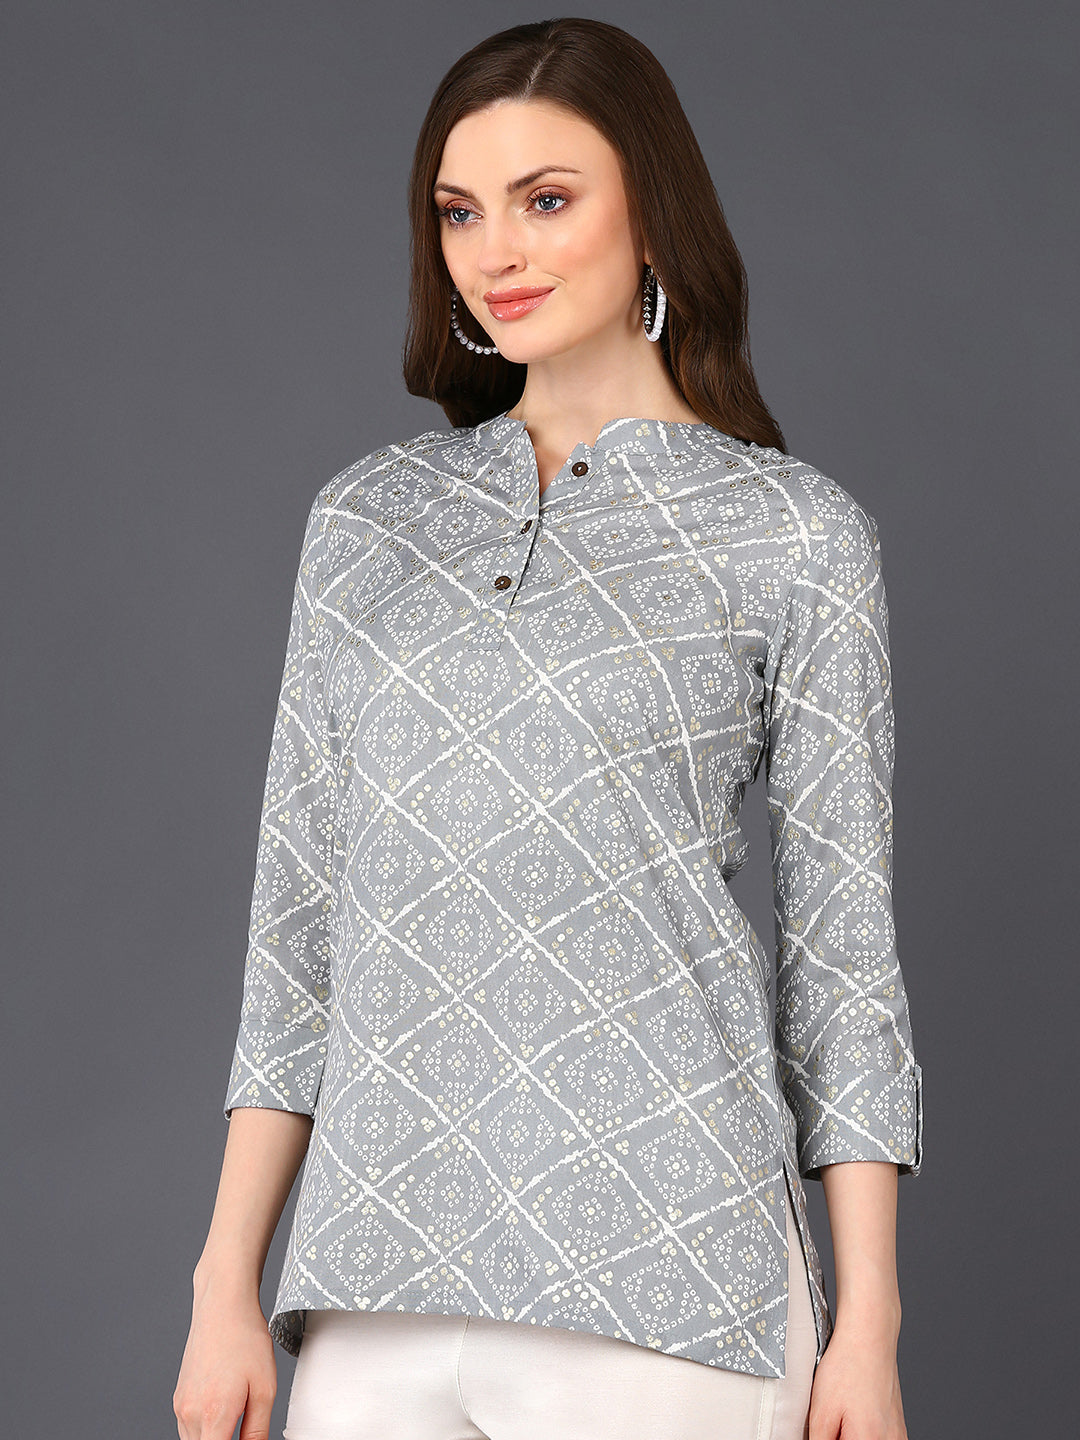 Women's Grey Cotton Blend Geometric Printed Topahika